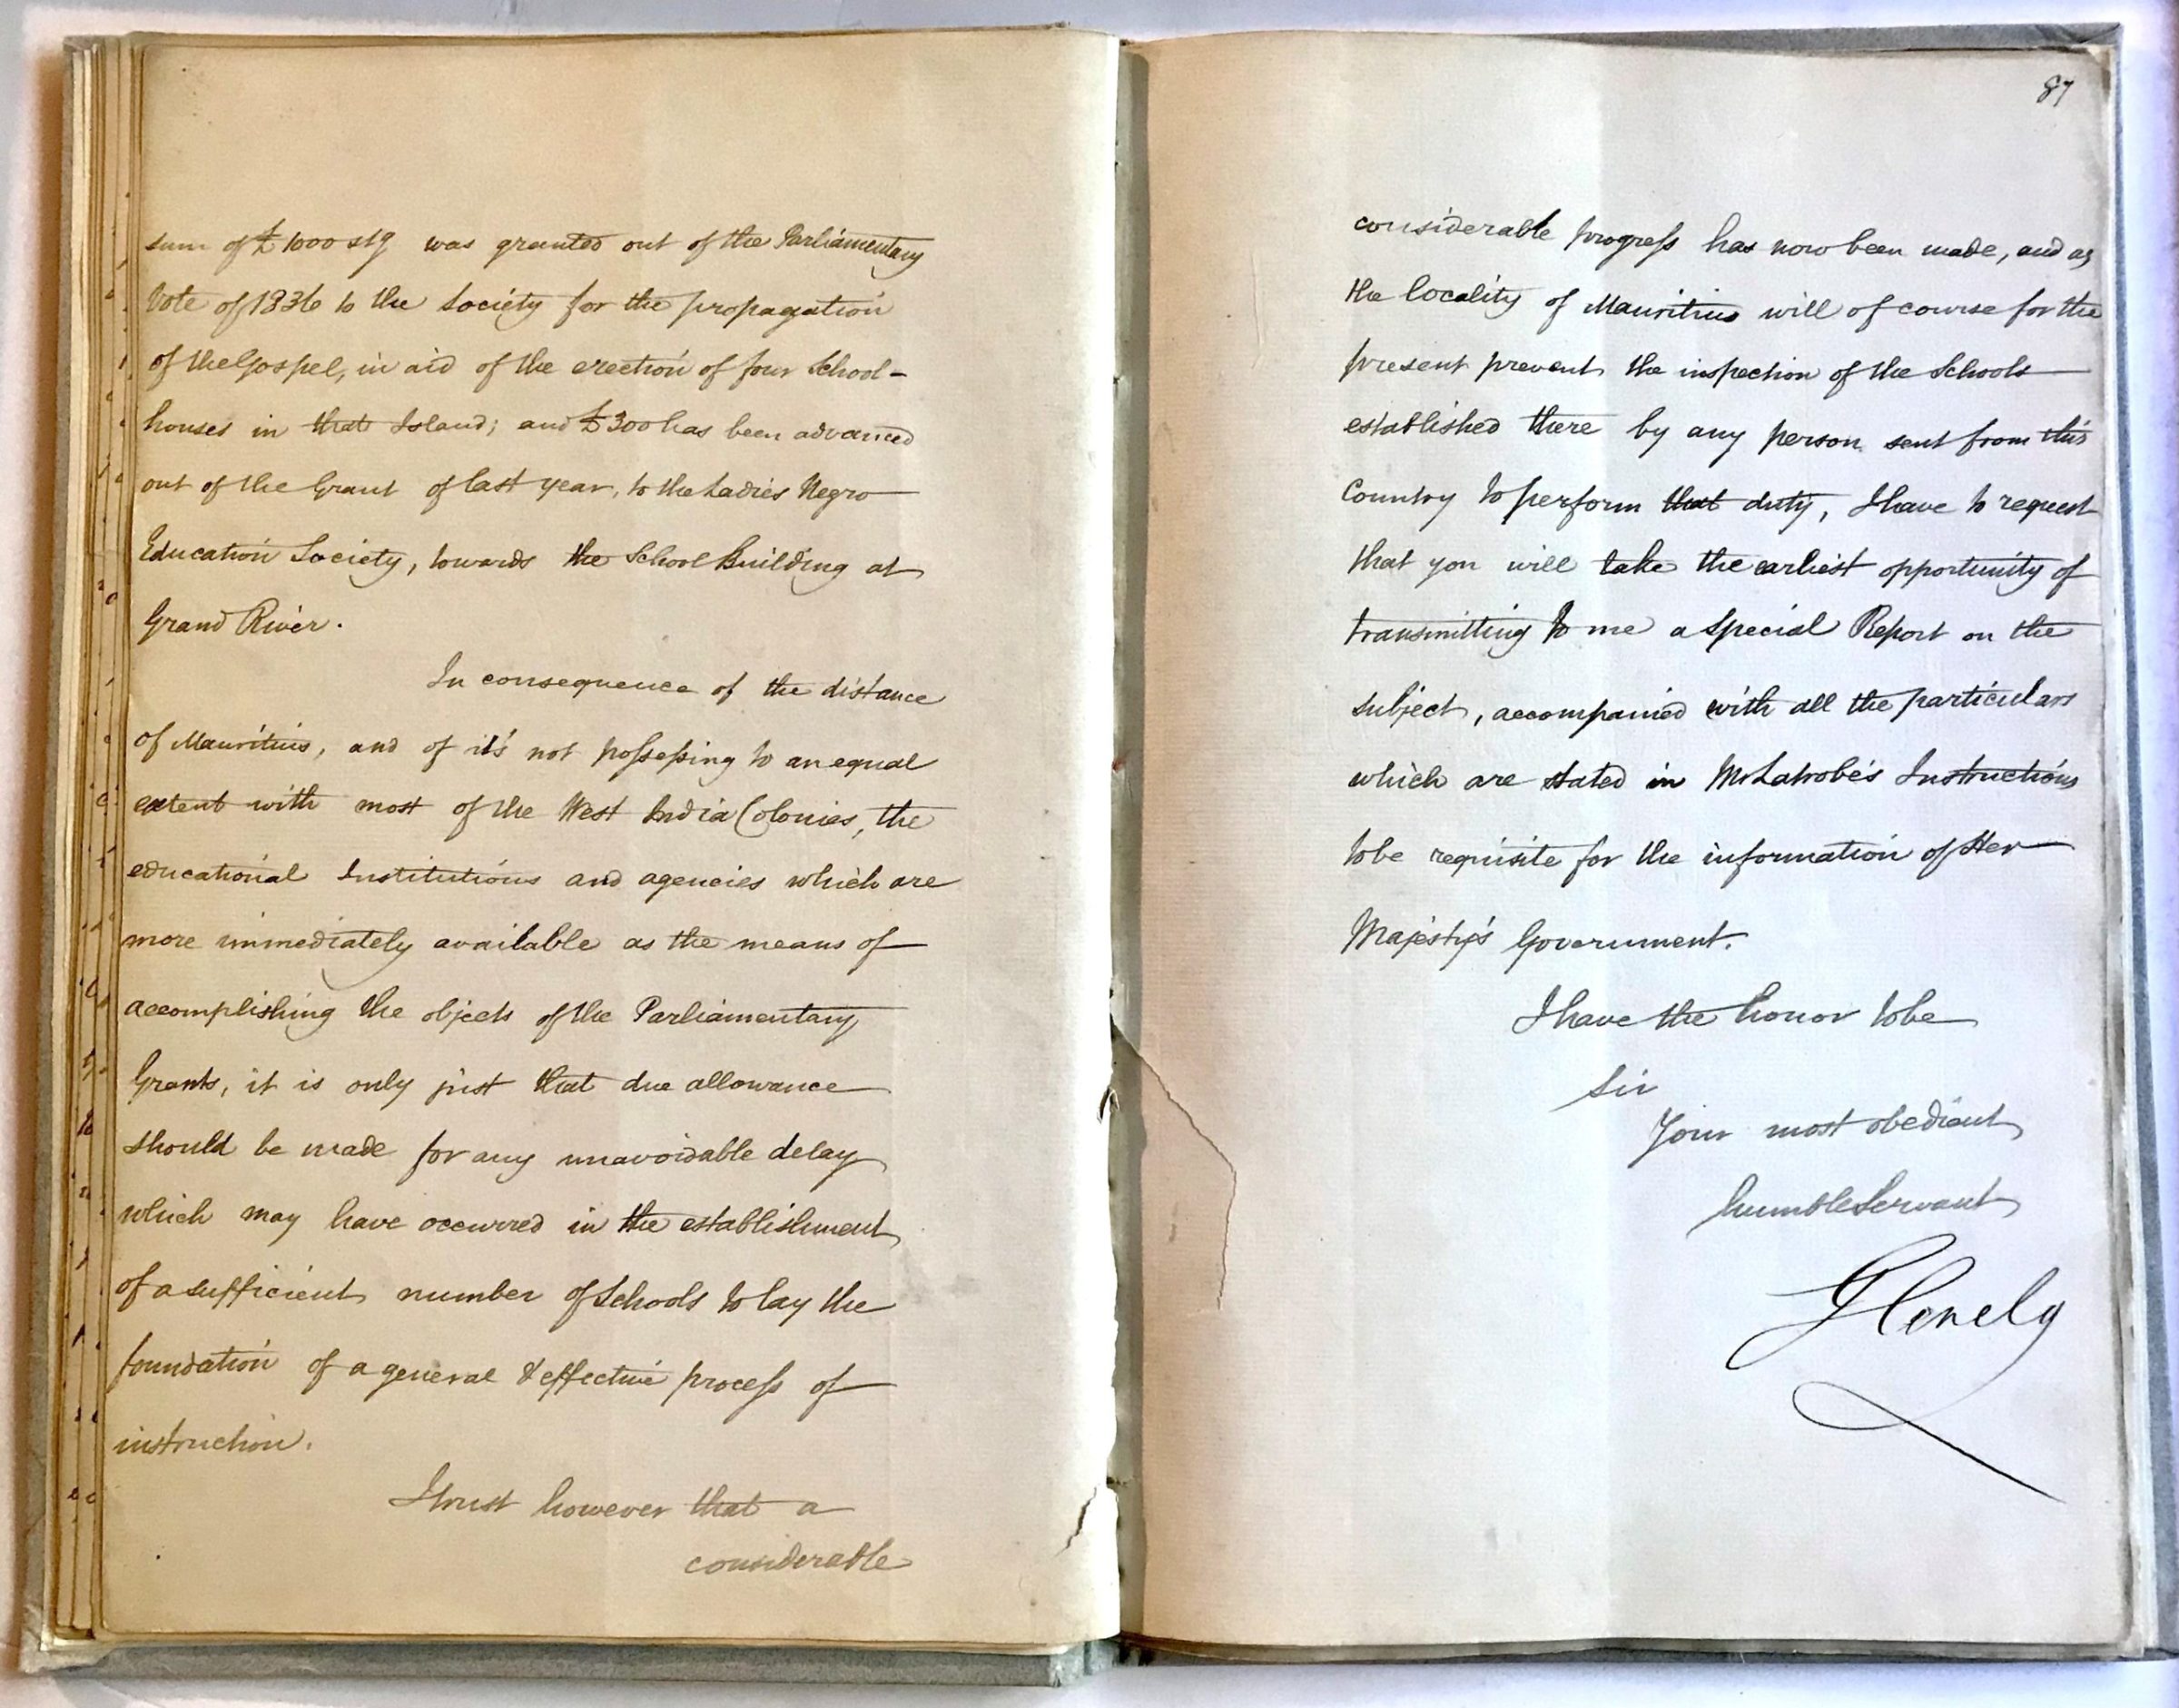 Charles Grant document